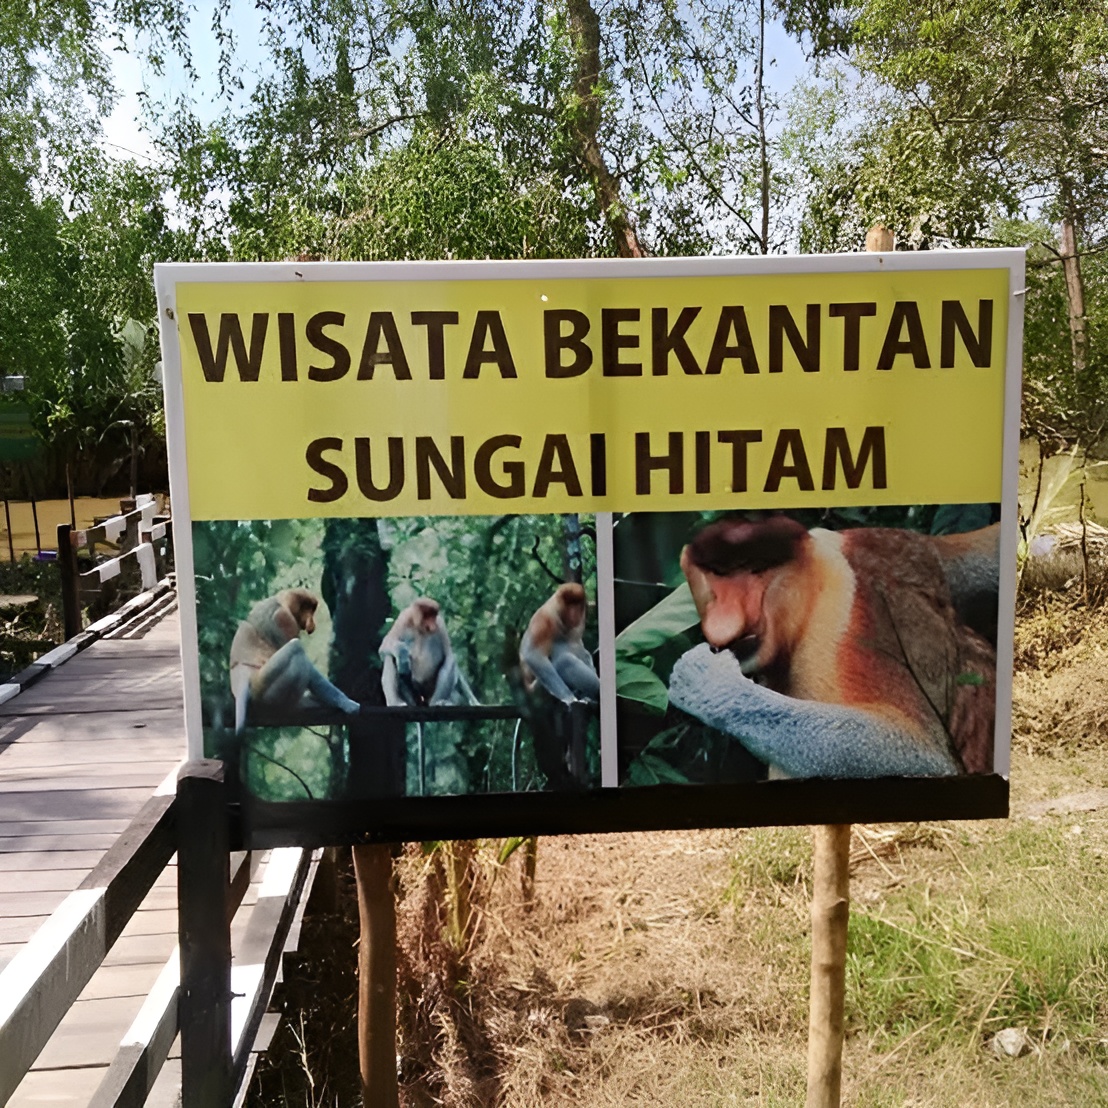 Foto: ILUSTRASI- Seekor bekantan di kawasan Sungai Hitam, Kelurahan Kampung Lama, Kecamatan Samboja, Kabupaten Kutai Kartanegara, Kalimantan Timur.